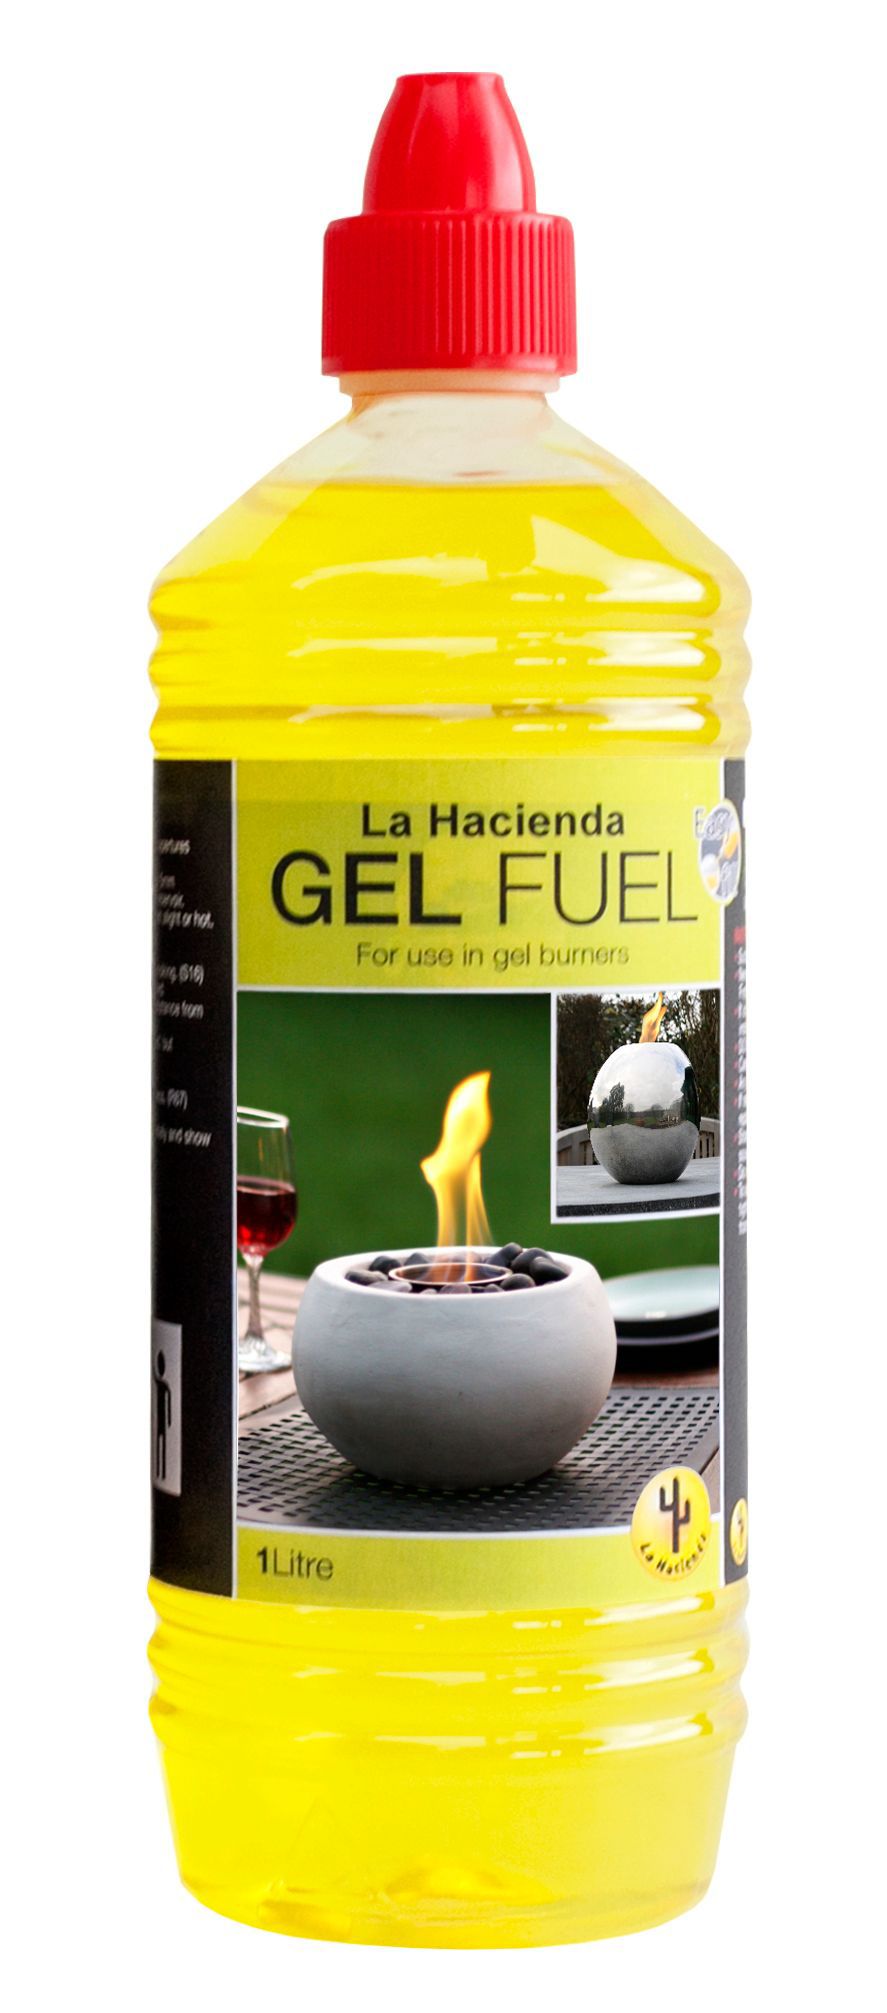 La Hacienda Gel fuel, 1L